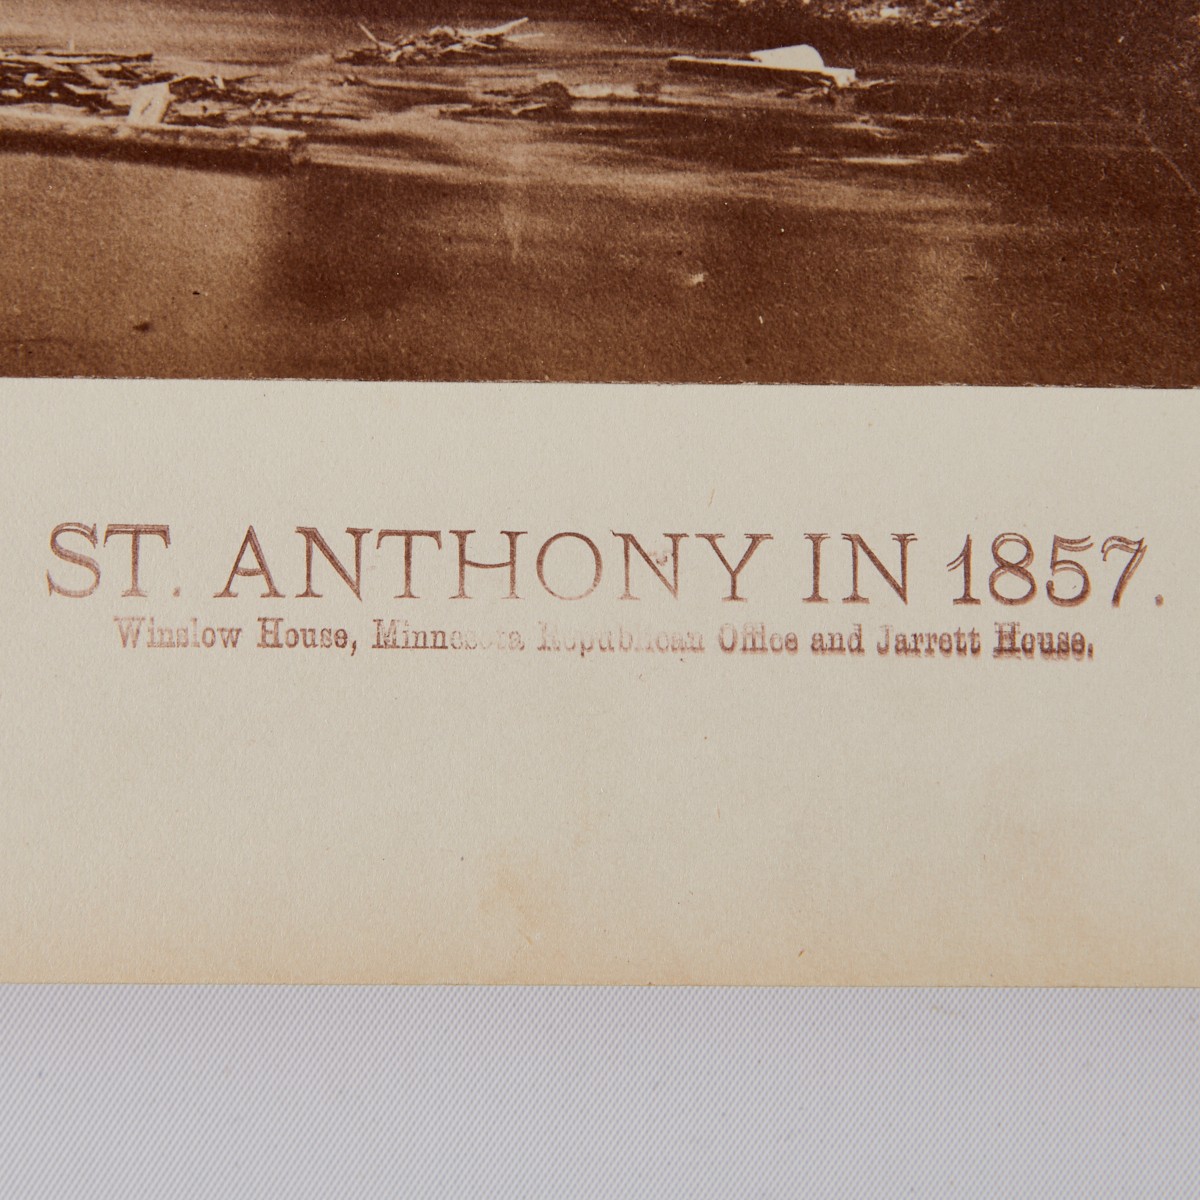 Benjamin Upton St. Anthony 1857 Photograph - Image 4 of 6